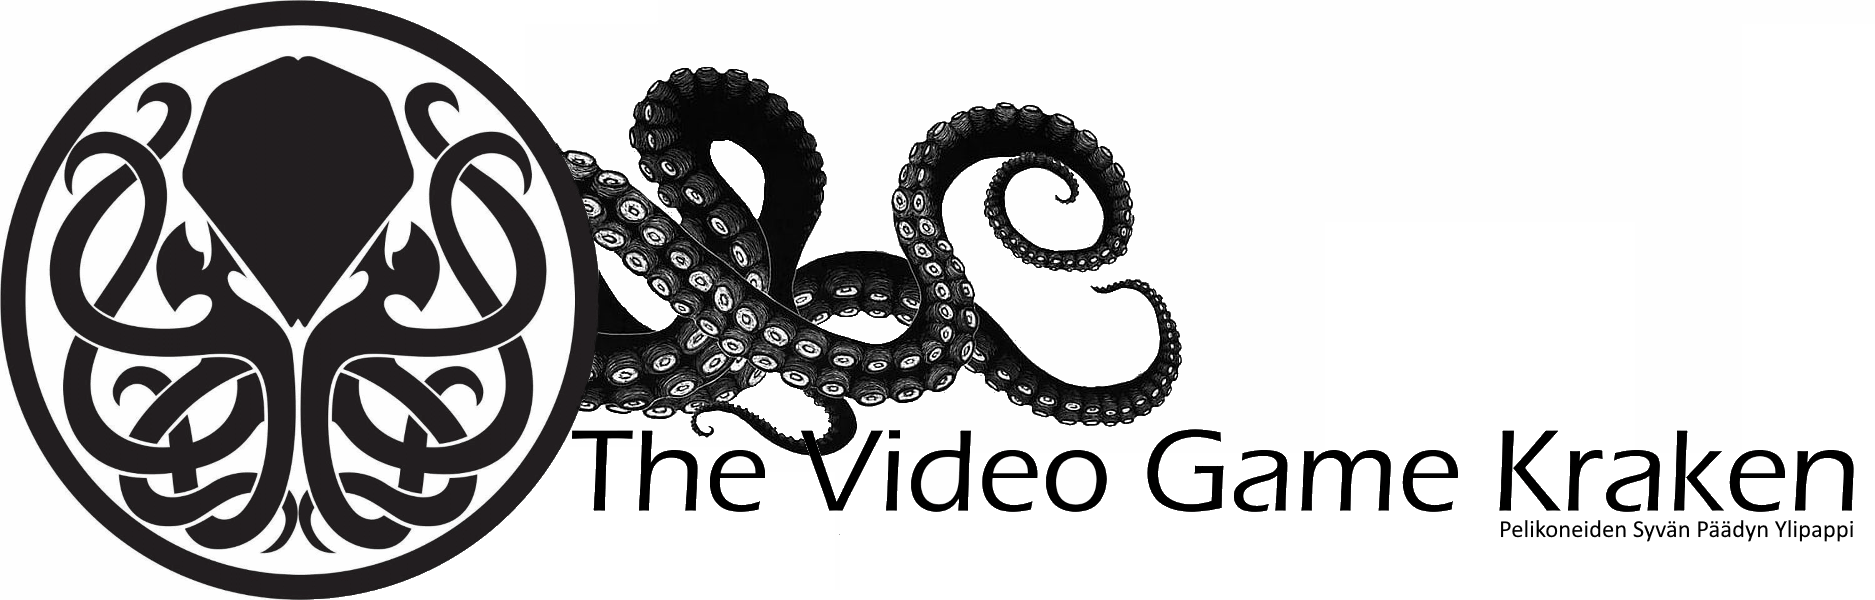 The Video Game Kraken